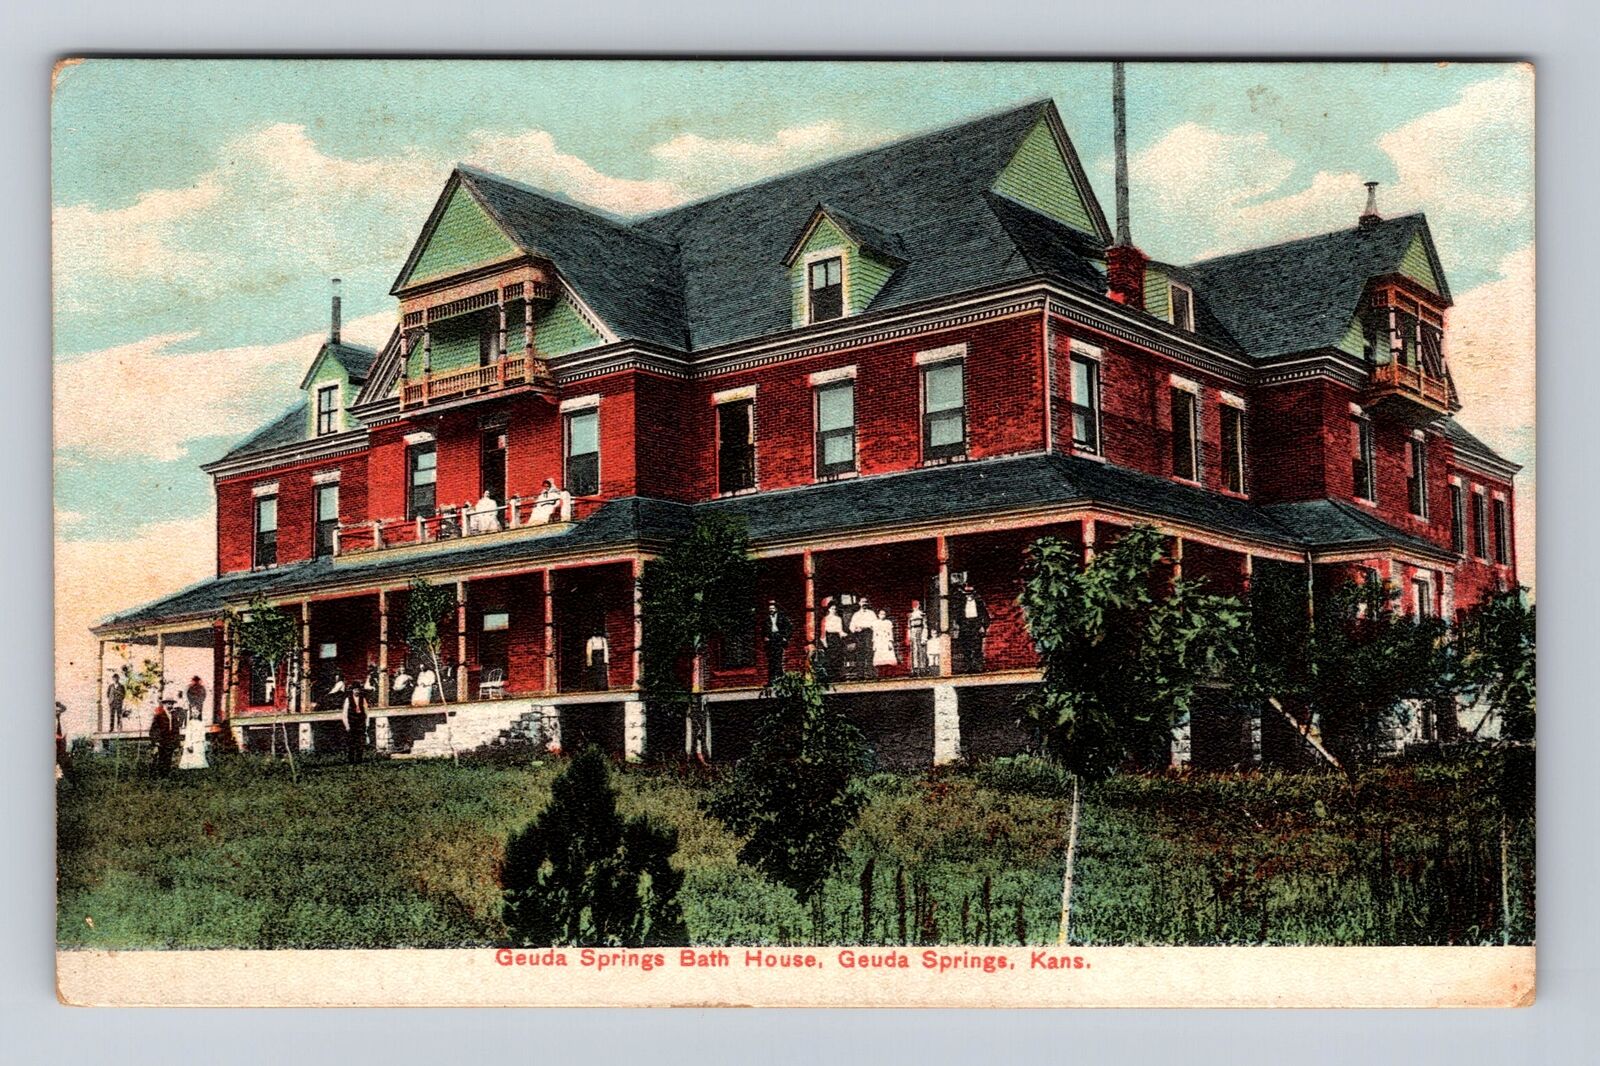 Geuda Springs KS-Kansas, Geuda Springs Bath House, Antique, Vintage Postcard